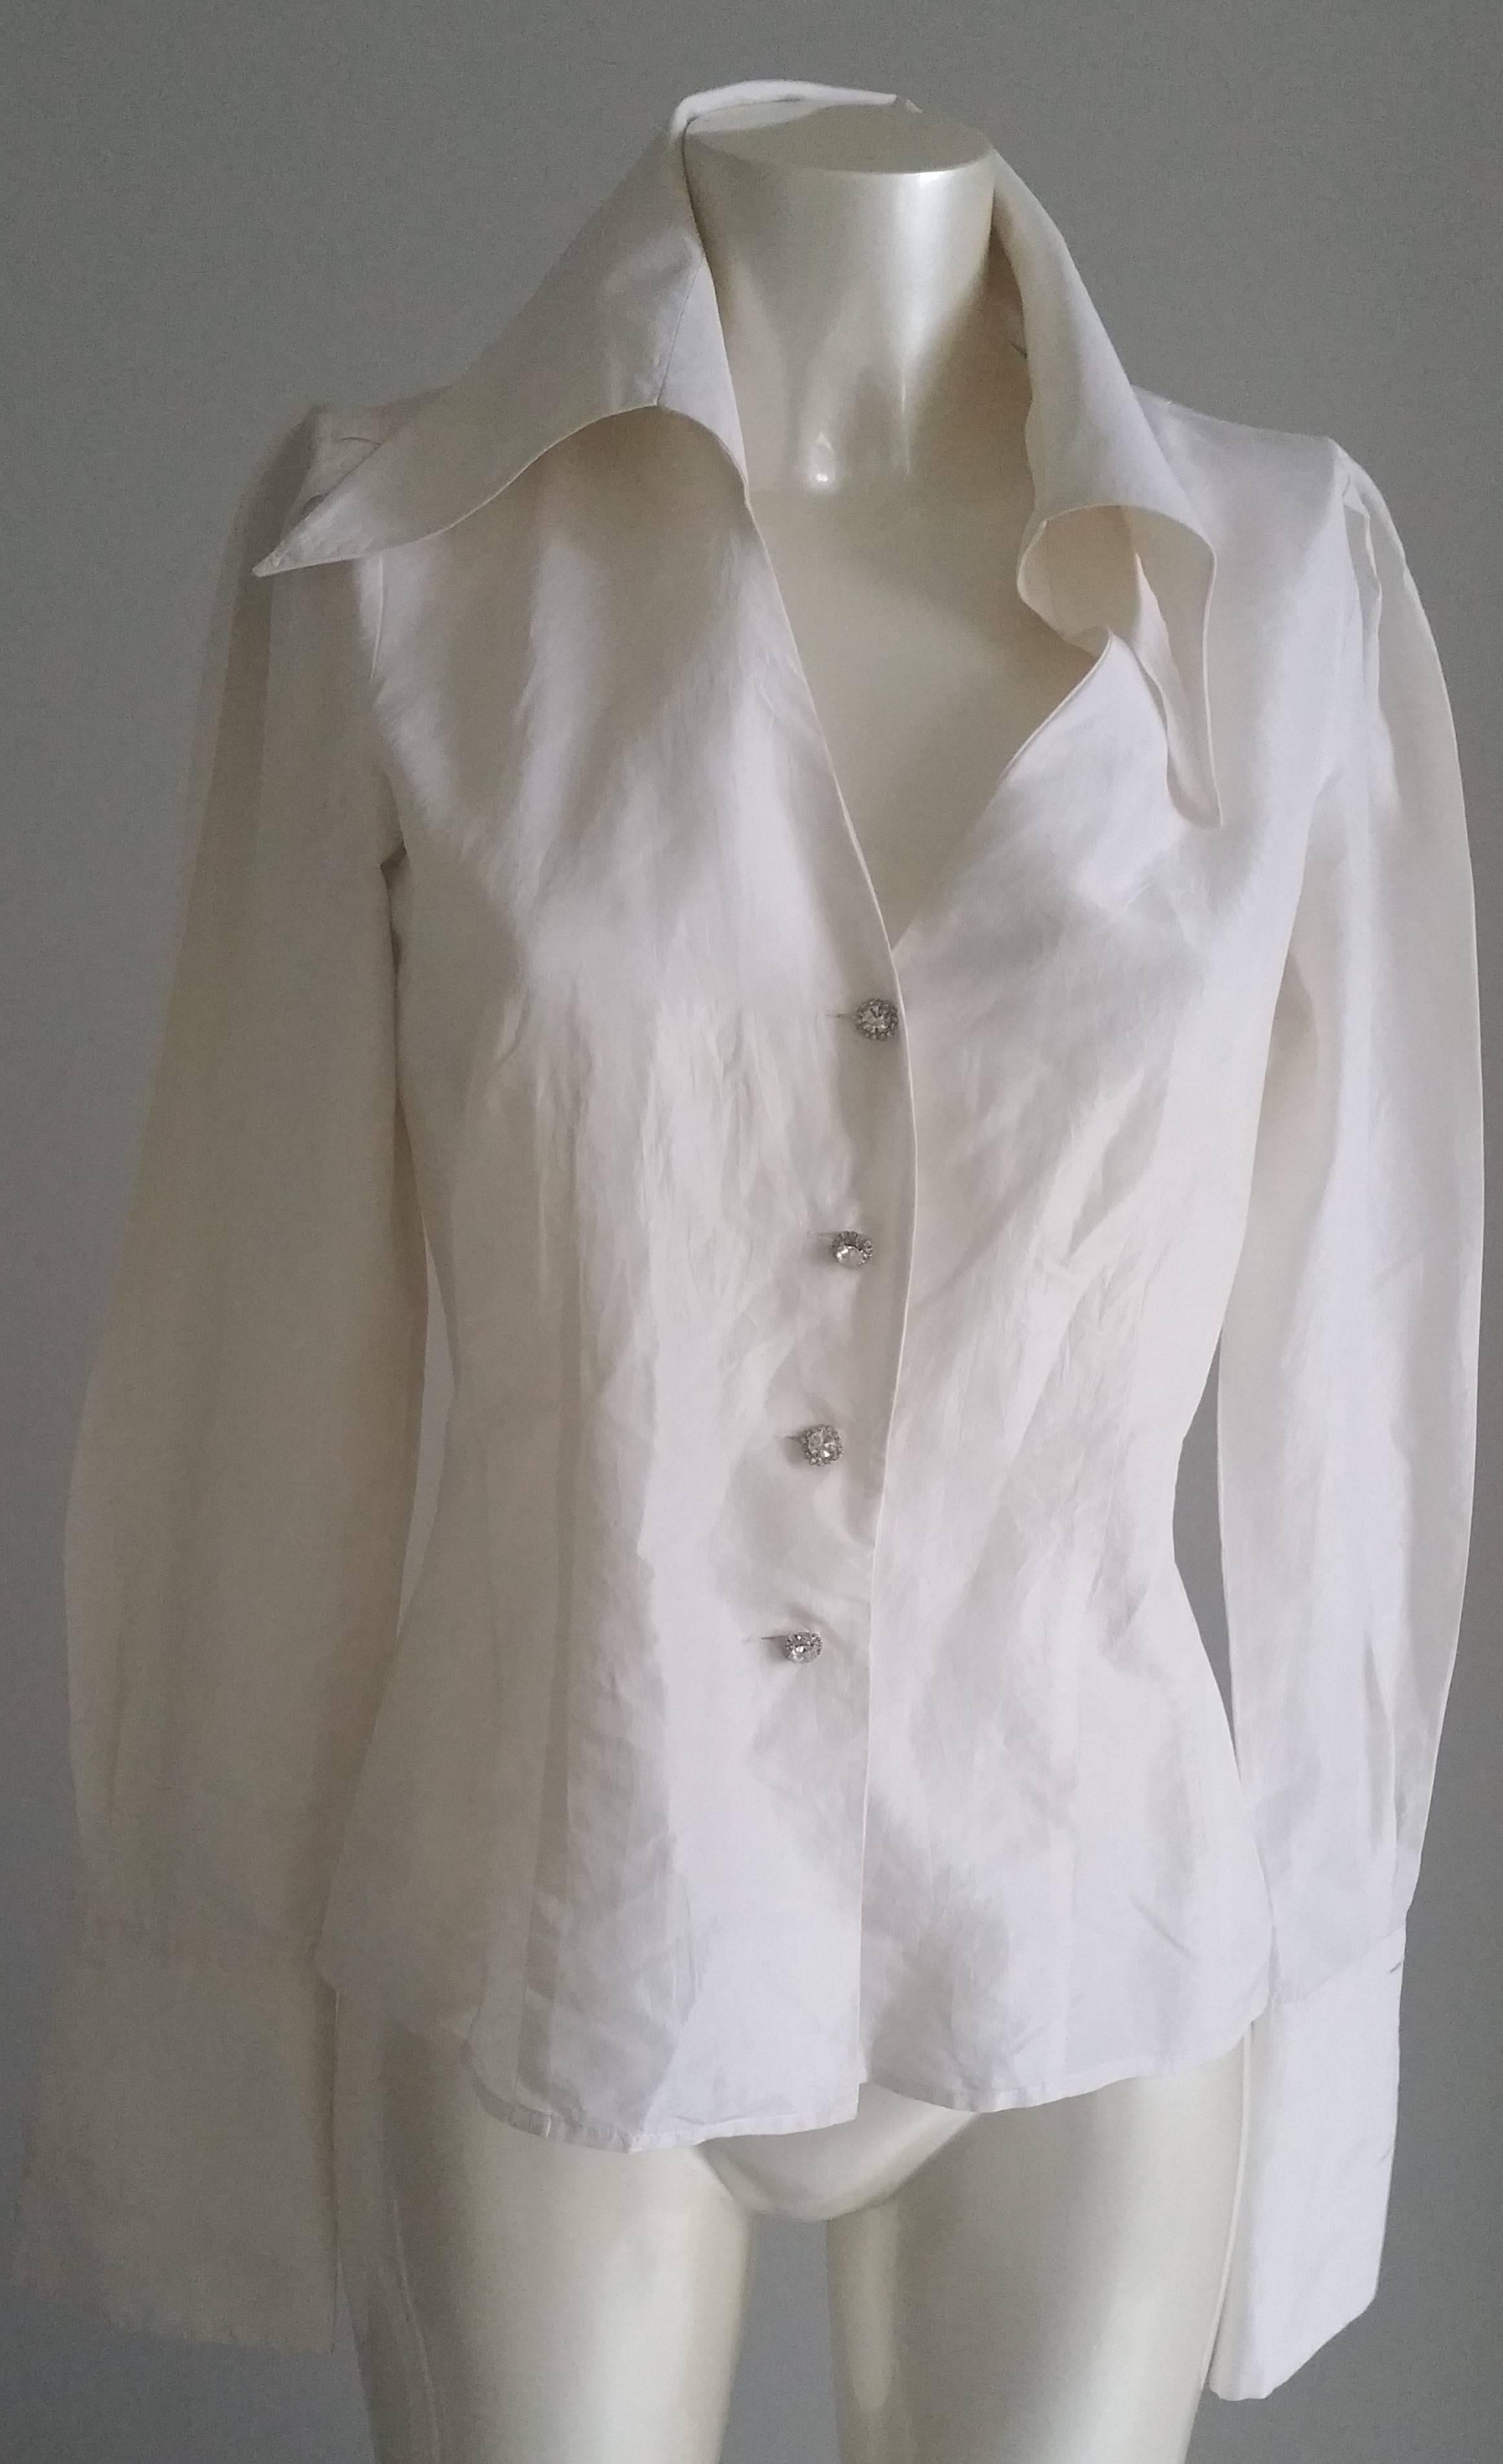 1990s Luis Spagnoli cream silk shirt 
4 Swarovski bottons on the front

totally made in italy
Composition: 100 _% silk
Size: 40 italian size range